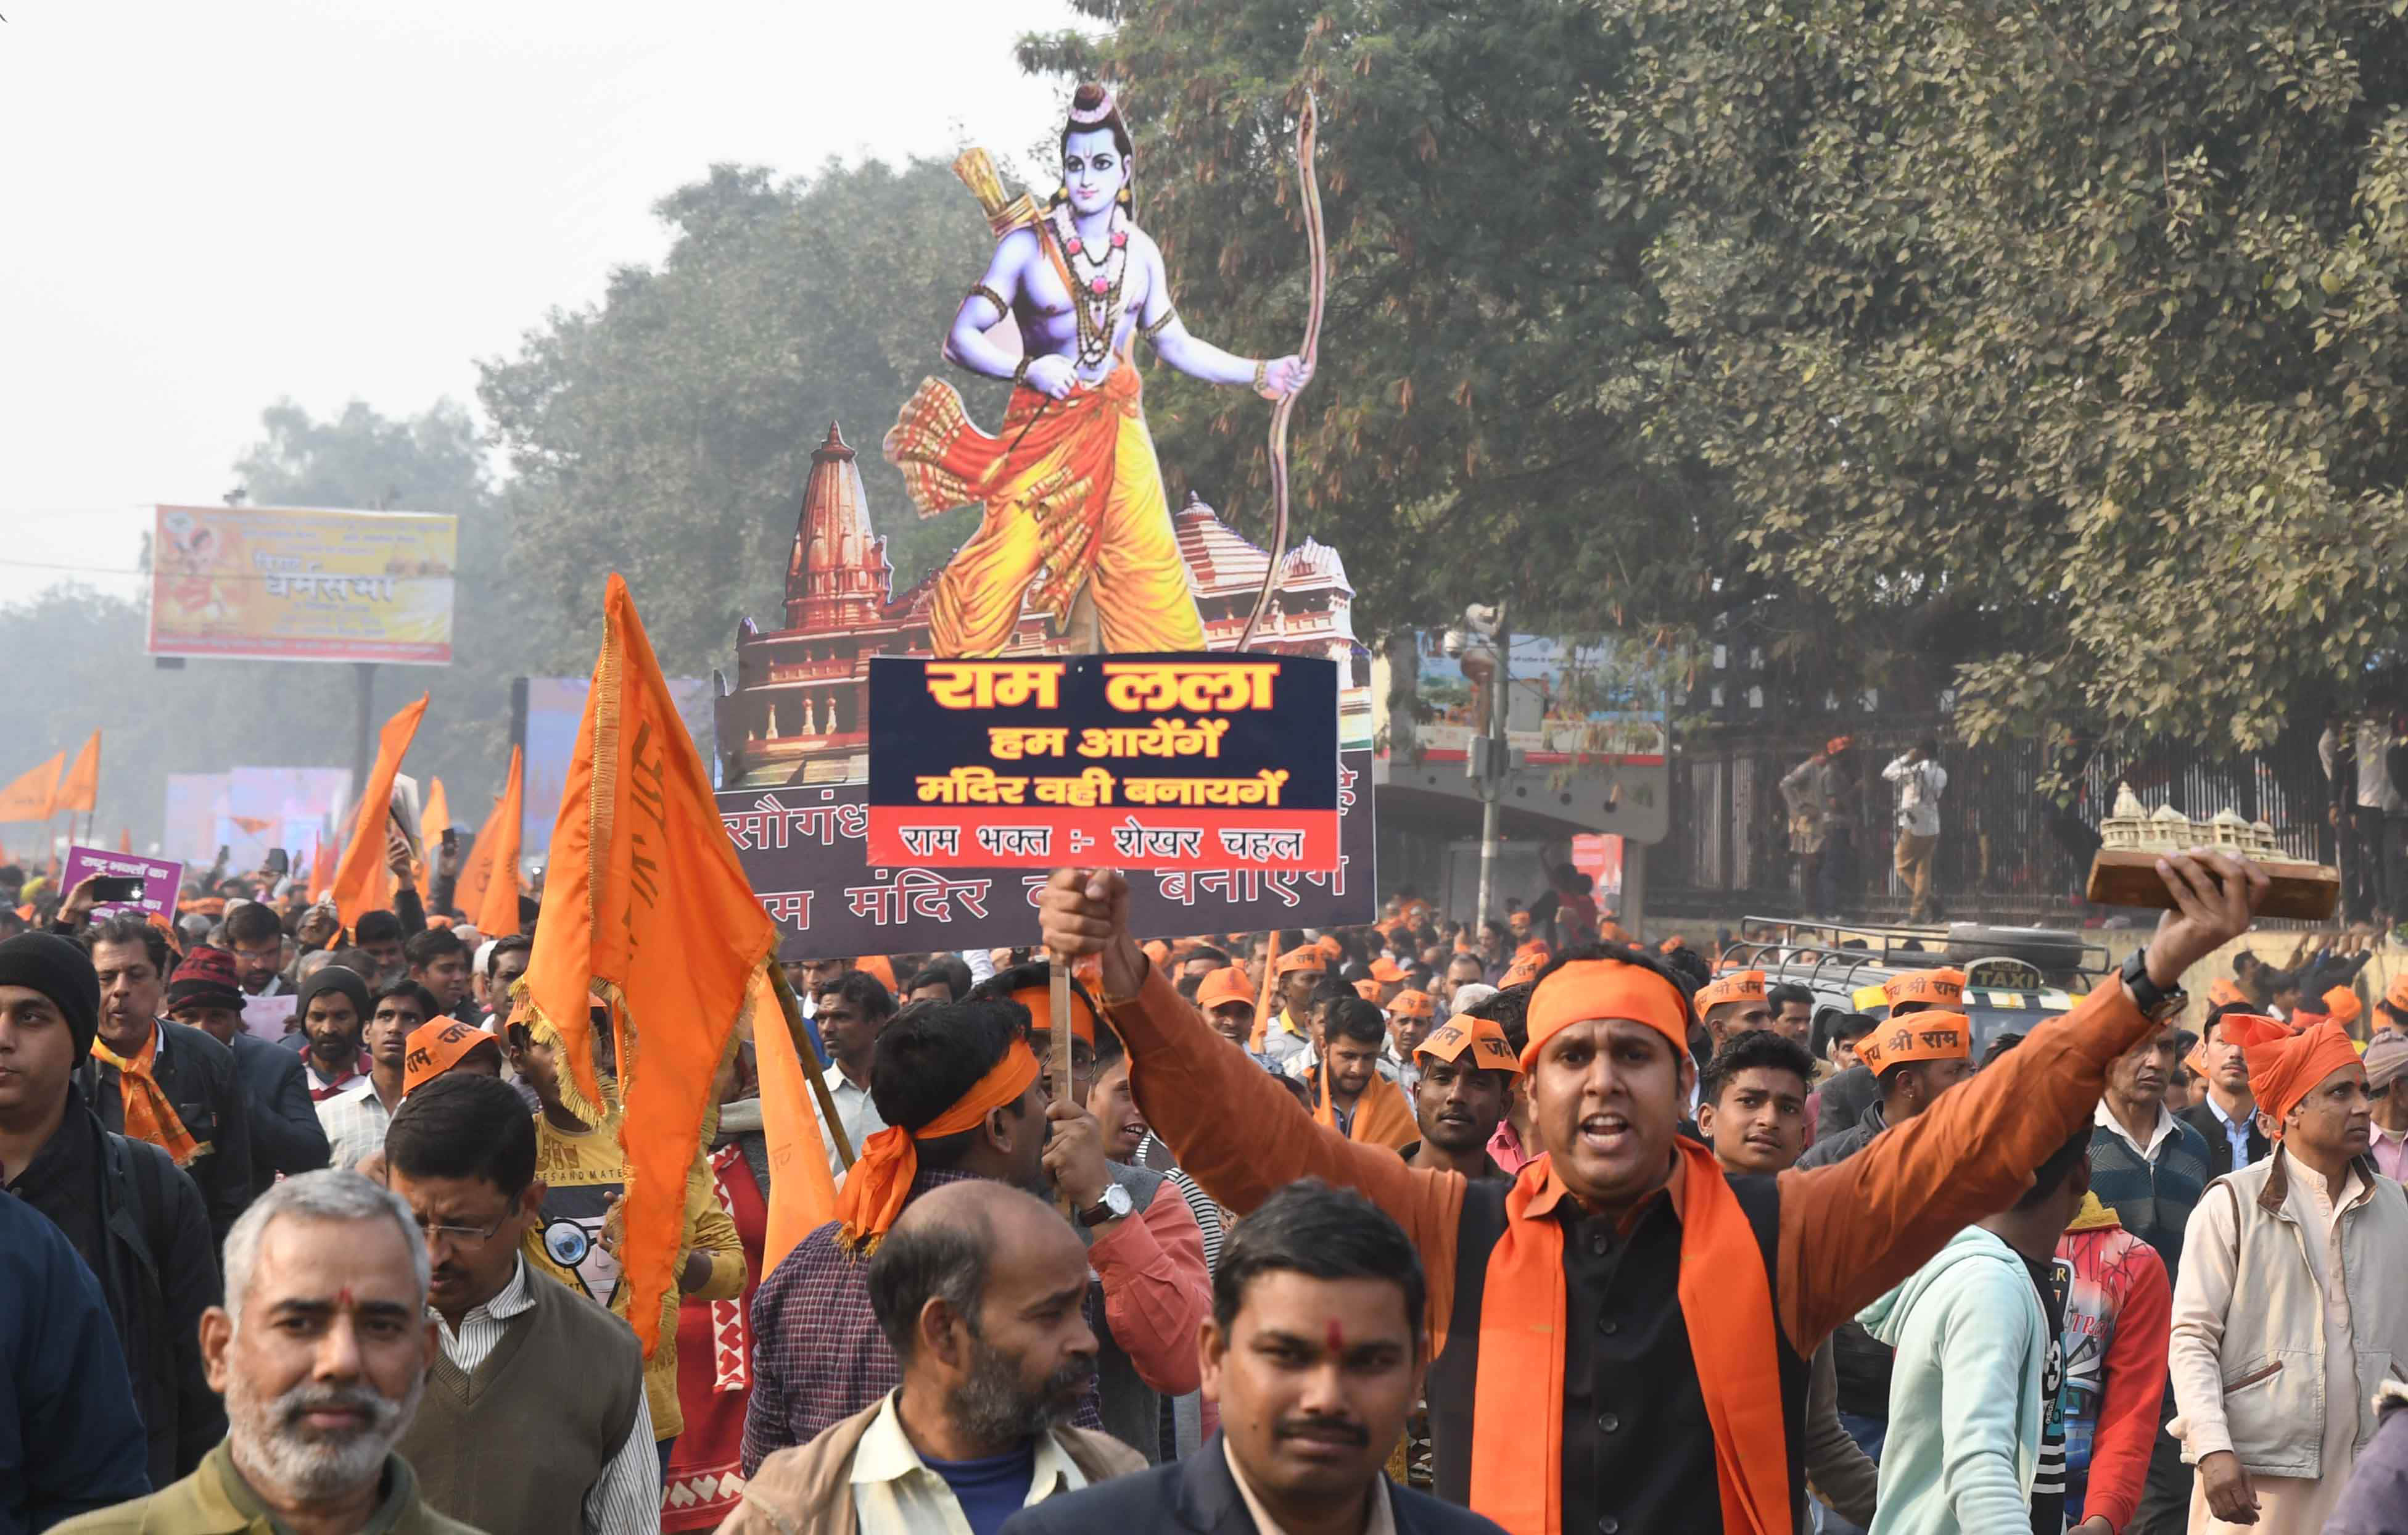 Vishwa Hindu Parishad (VHP) supporters demanding Ram Temple in Ayodhya rally, New Delhi